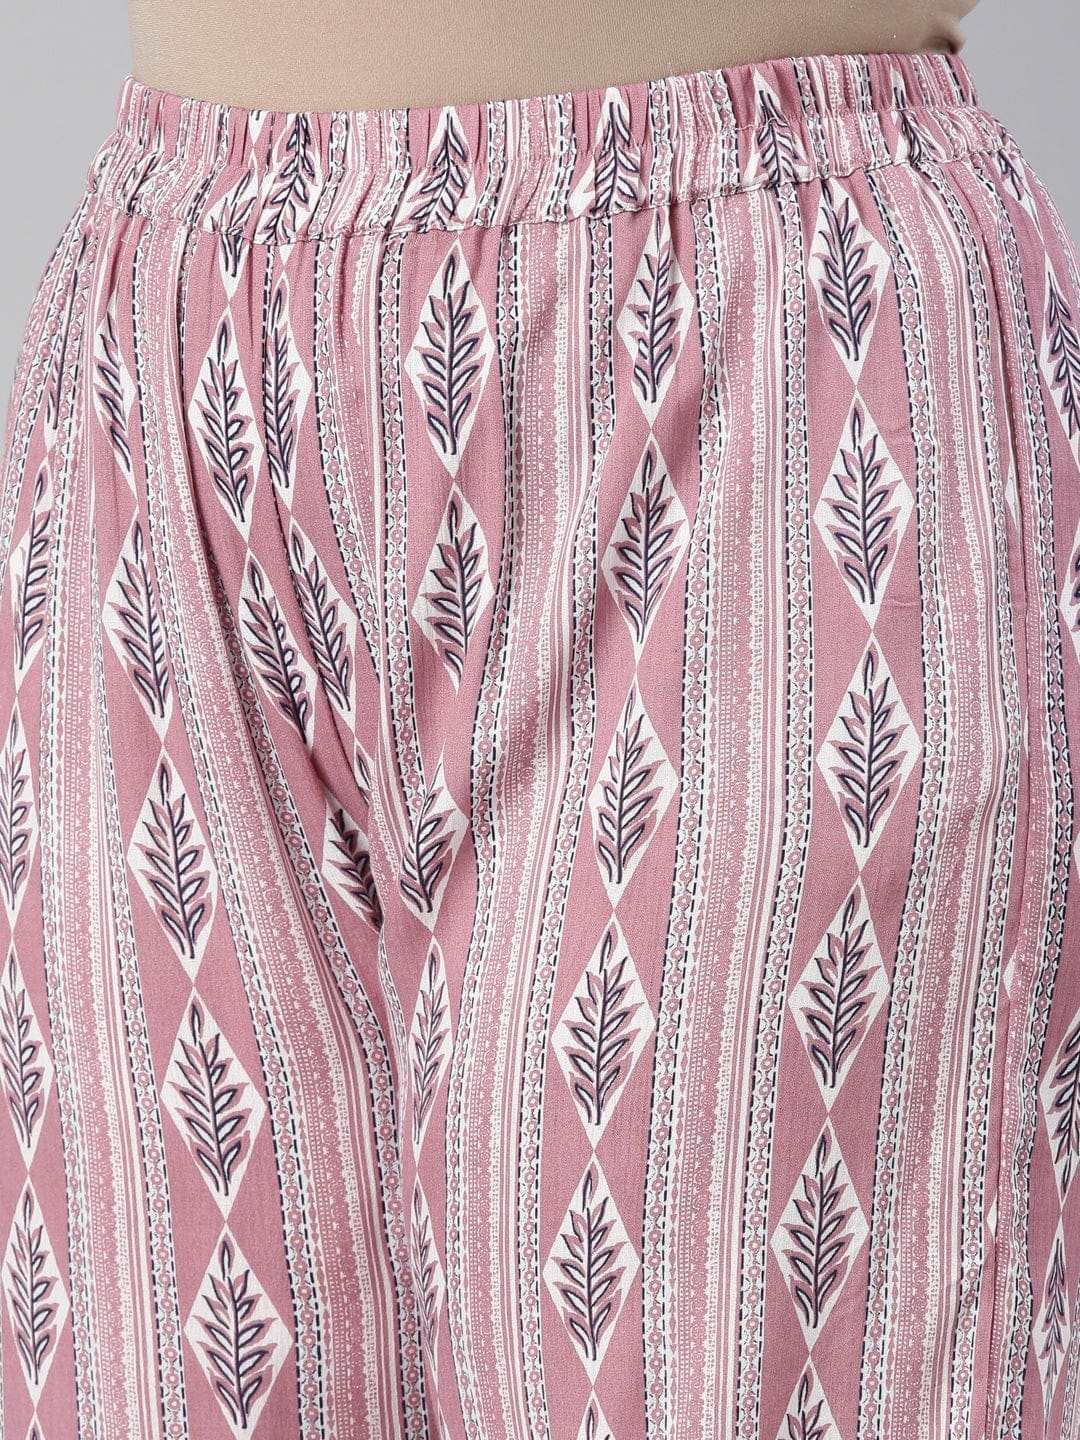 Buy  peplum dress /Women's /Pink ethnic printed /peplum top /palazzo pant on online from the Shailiink eBuy  peplum dress /Women's /Pink ethnic printed /peplum top /palazzo pant on online from the Shailithnic printed peplum top and elasticated palazzo